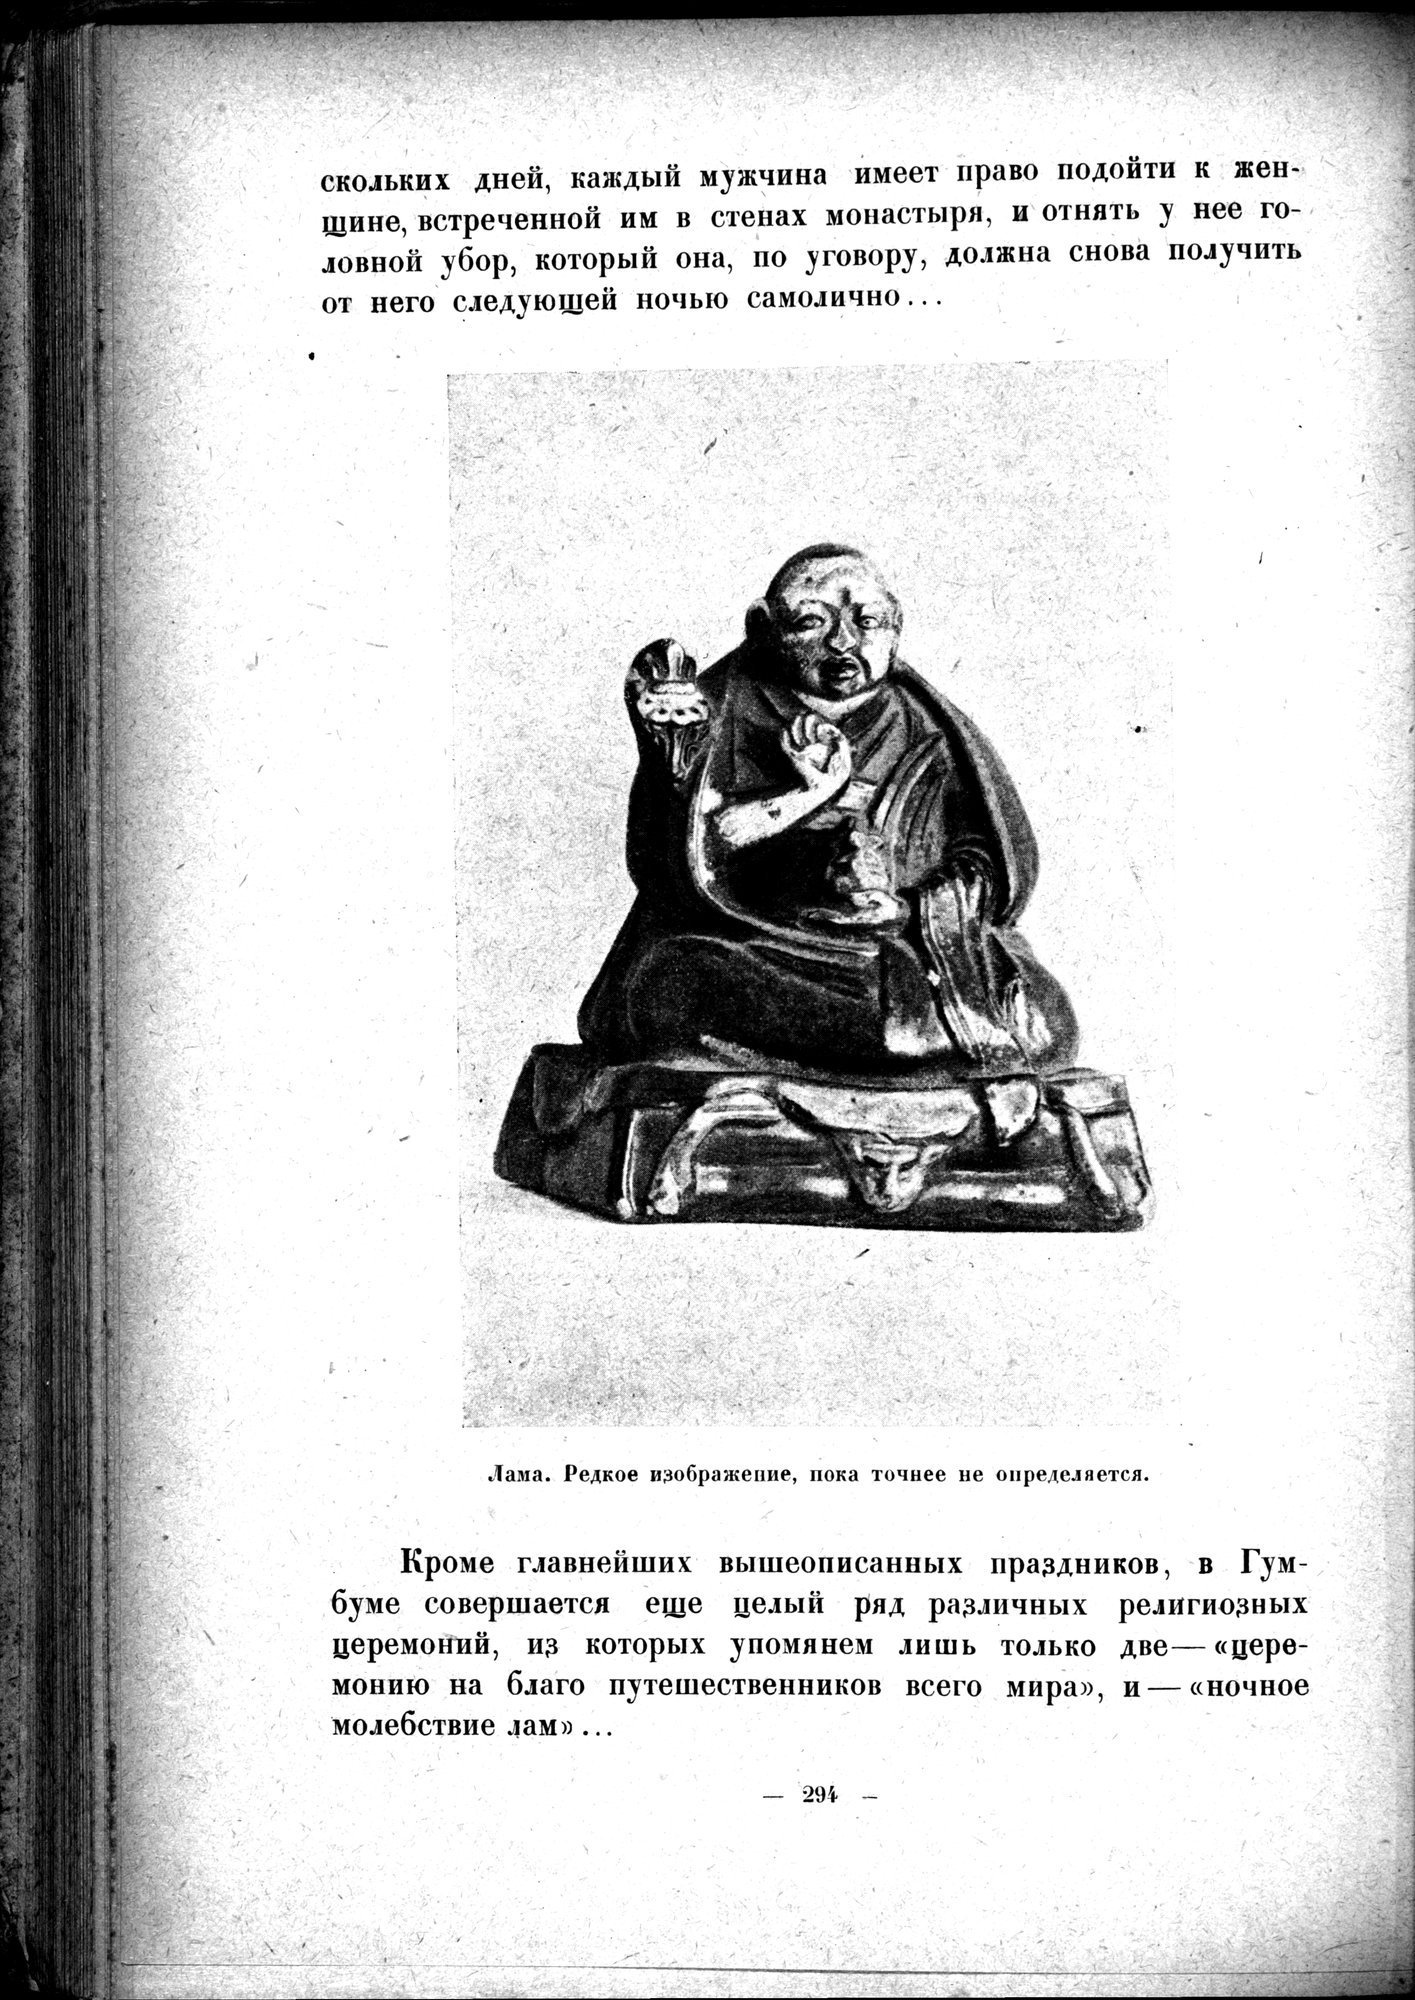 Mongoliya i Amdo i mertby gorod Khara-Khoto : vol.1 / Page 344 (Grayscale High Resolution Image)